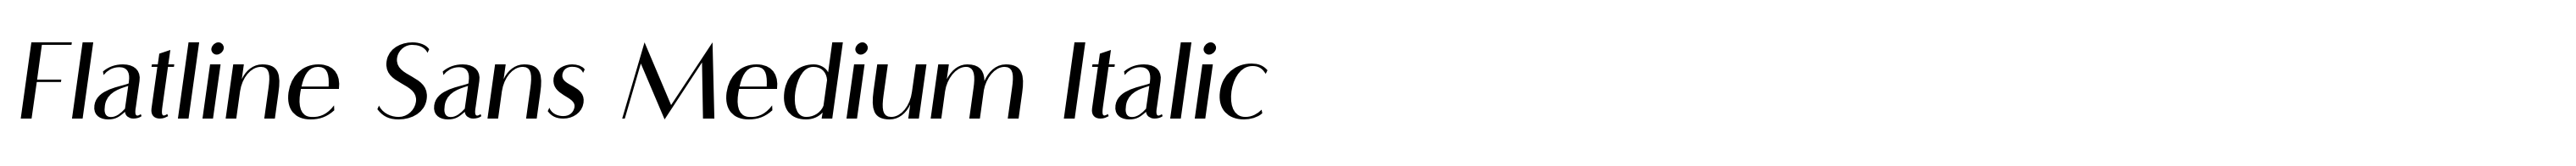 Flatline Sans Medium Italic